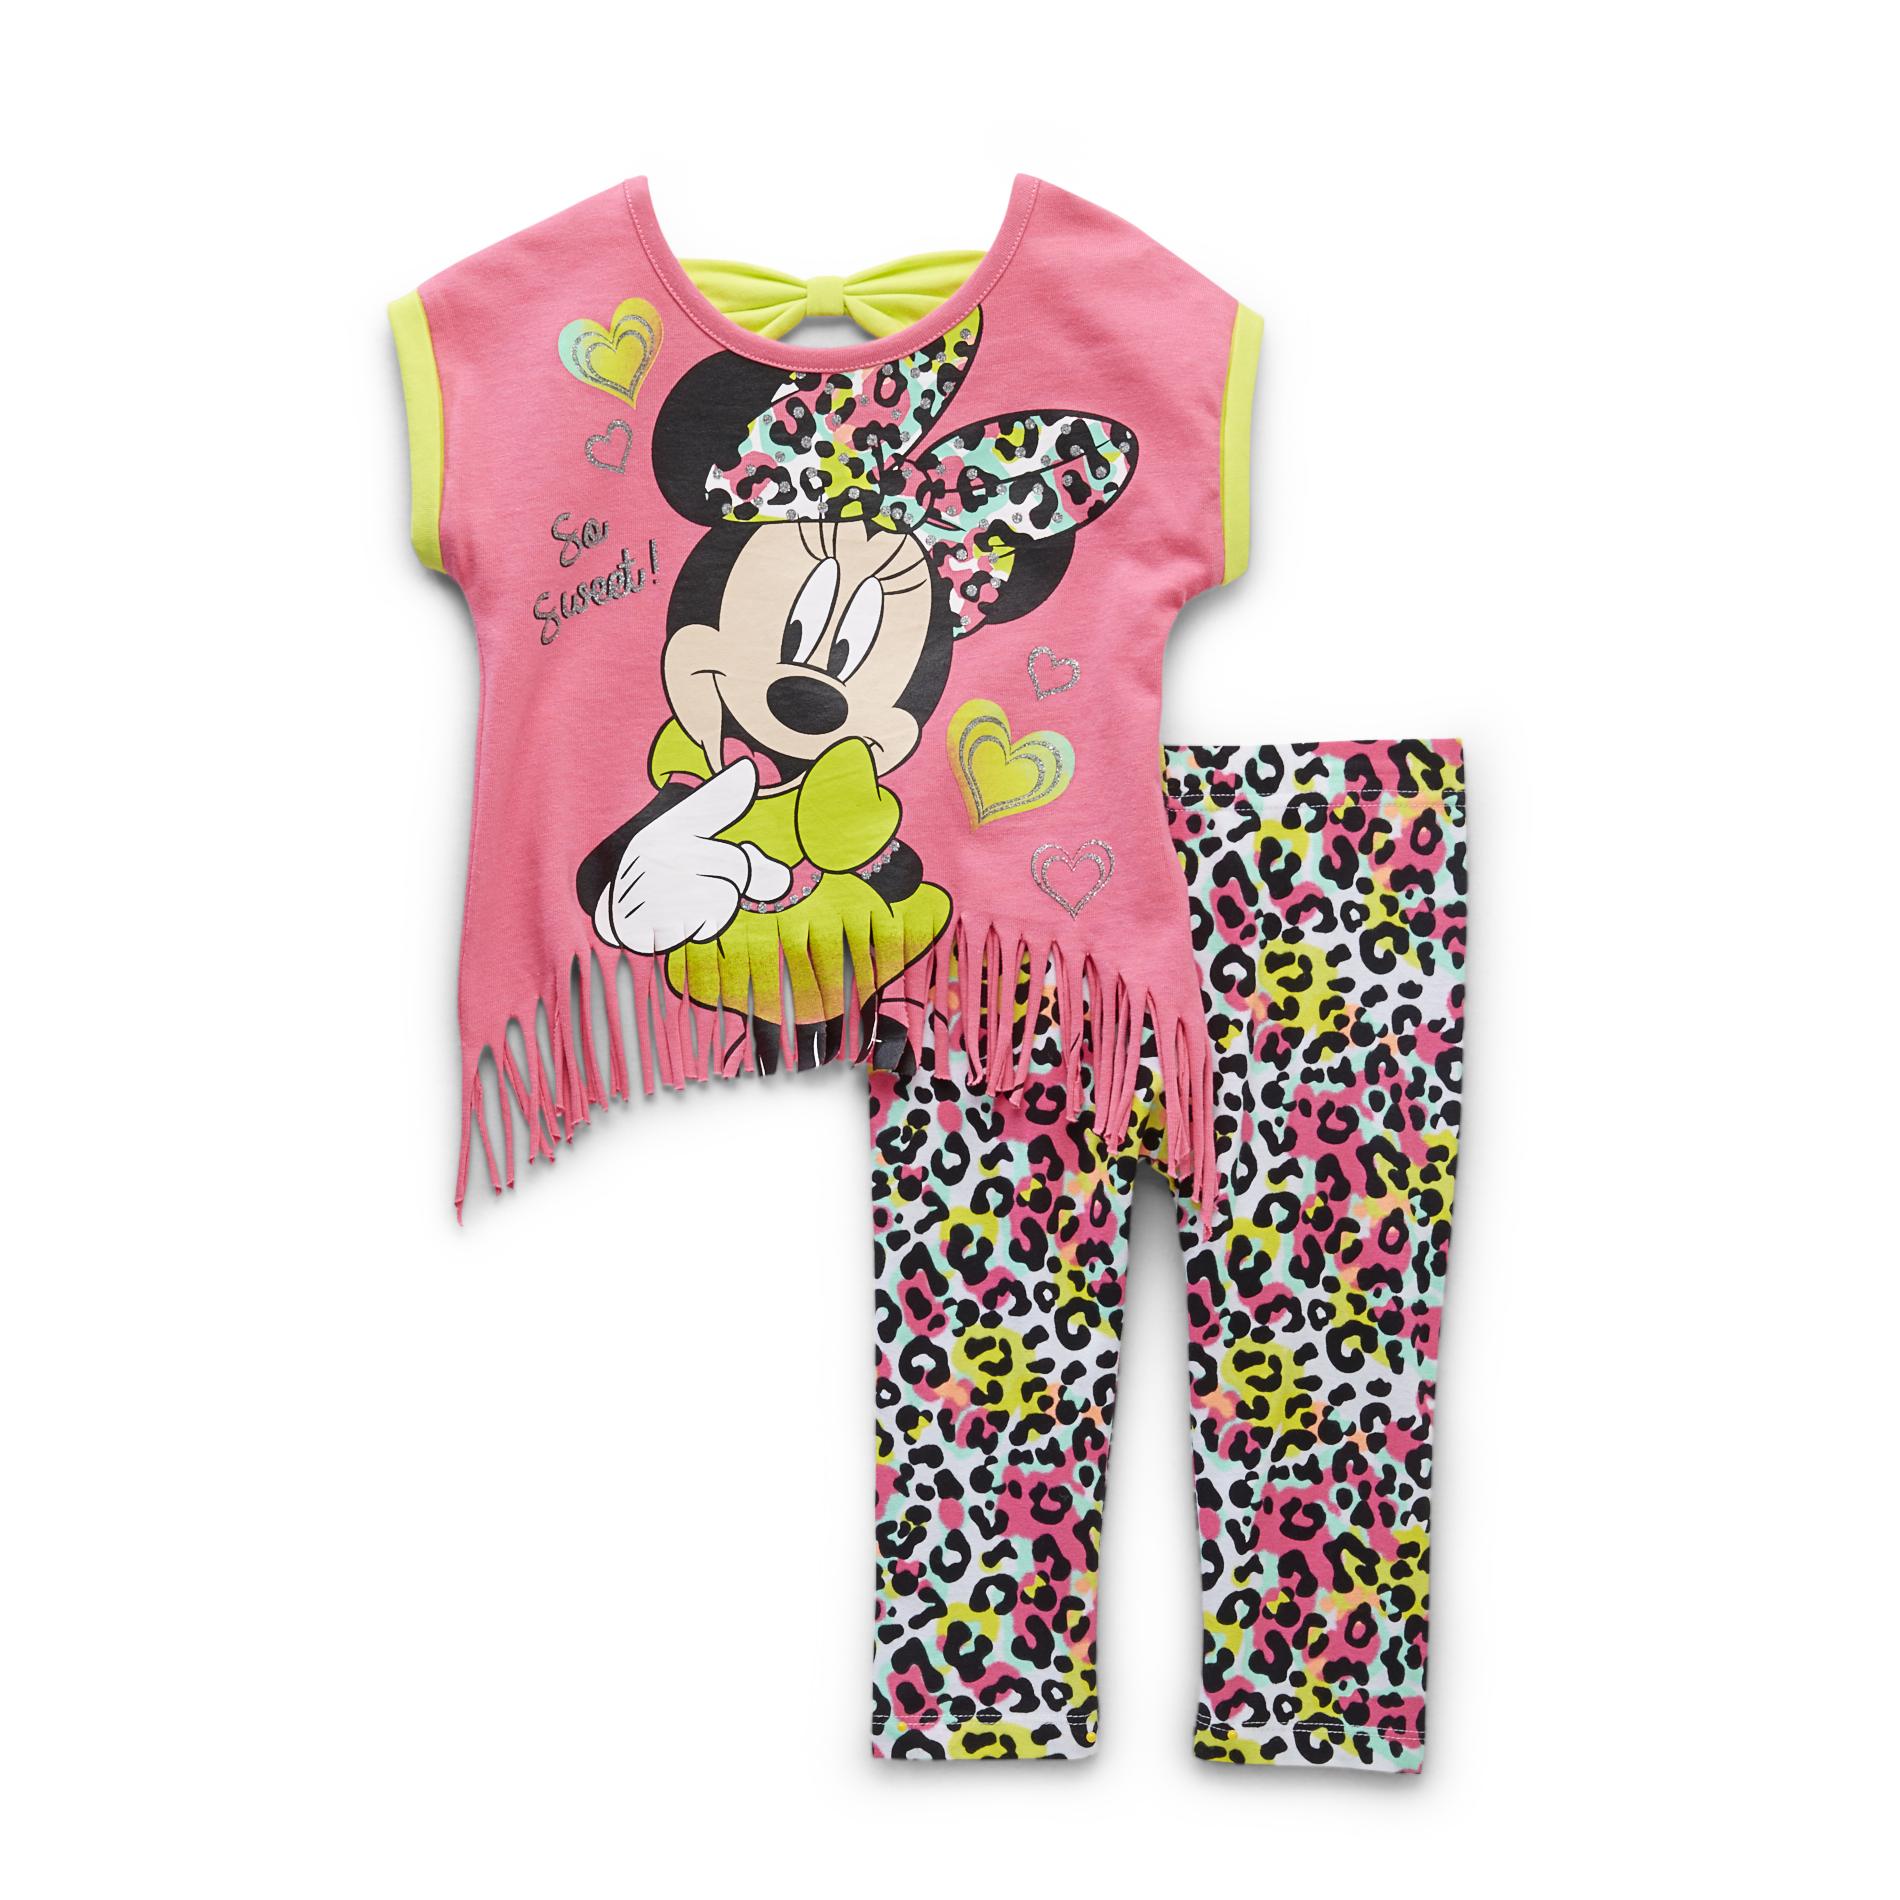 Disney Minnie Mouse Infant & Toddler Girl's Fringed Top & Leggings - Leopard